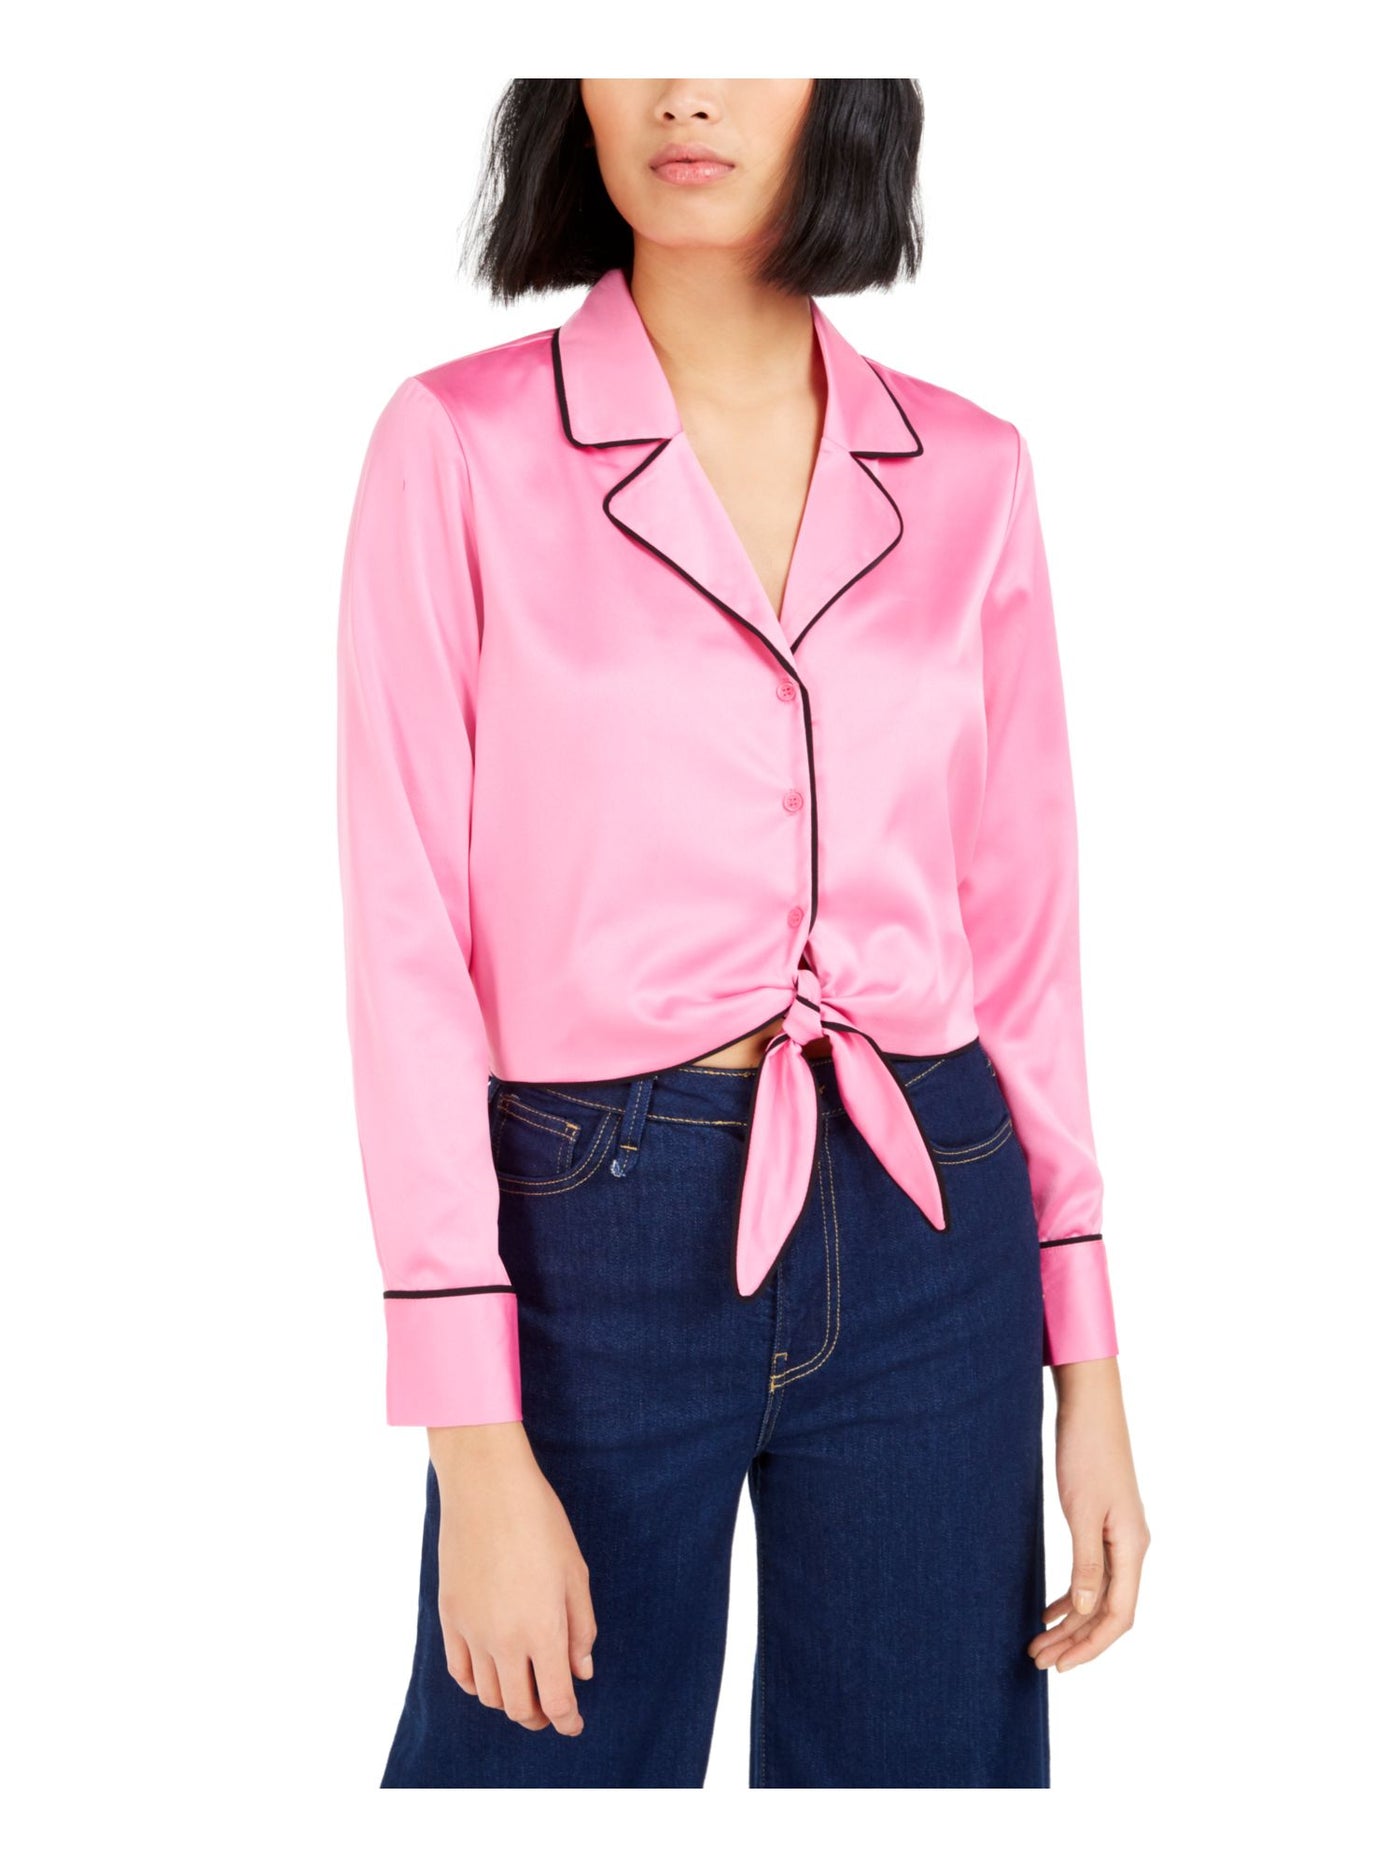 BECCA TILLEY X BAR III Womens Pink Tie Cuffed Sleeve Collared Button Up Top XS